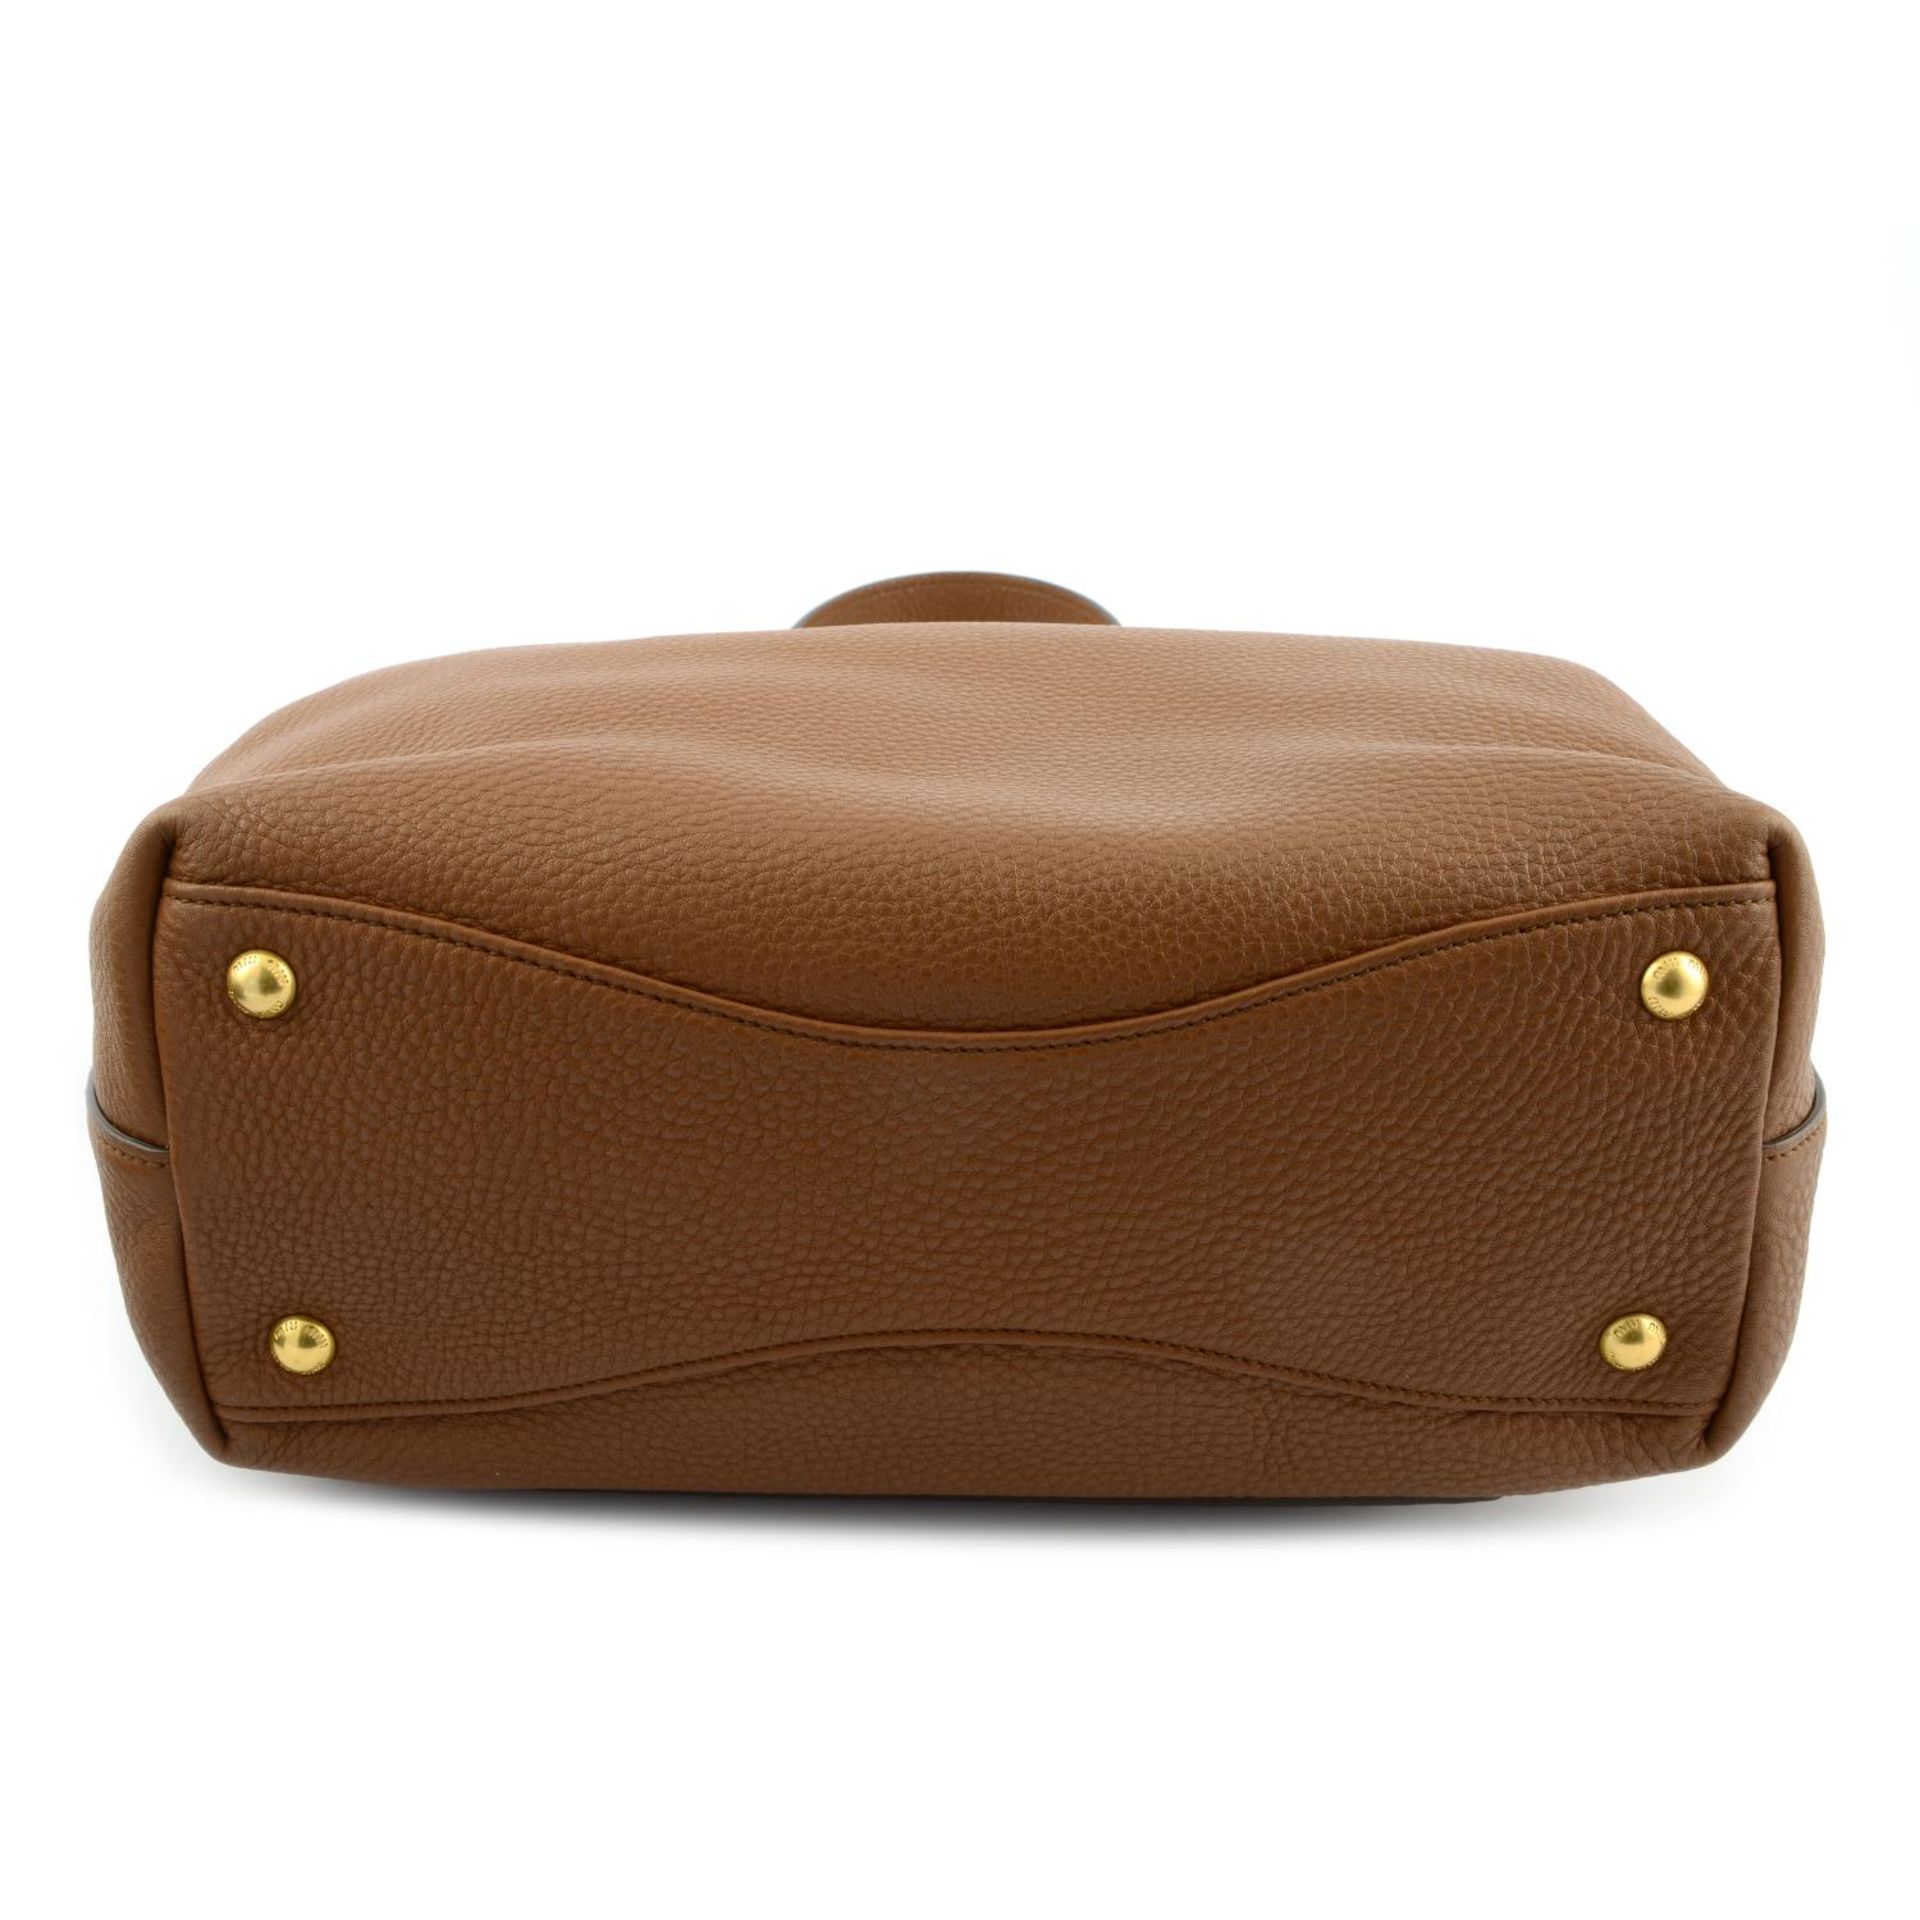 MIU MIU - a Vitello tan leather handbag. - Bild 4 aus 4